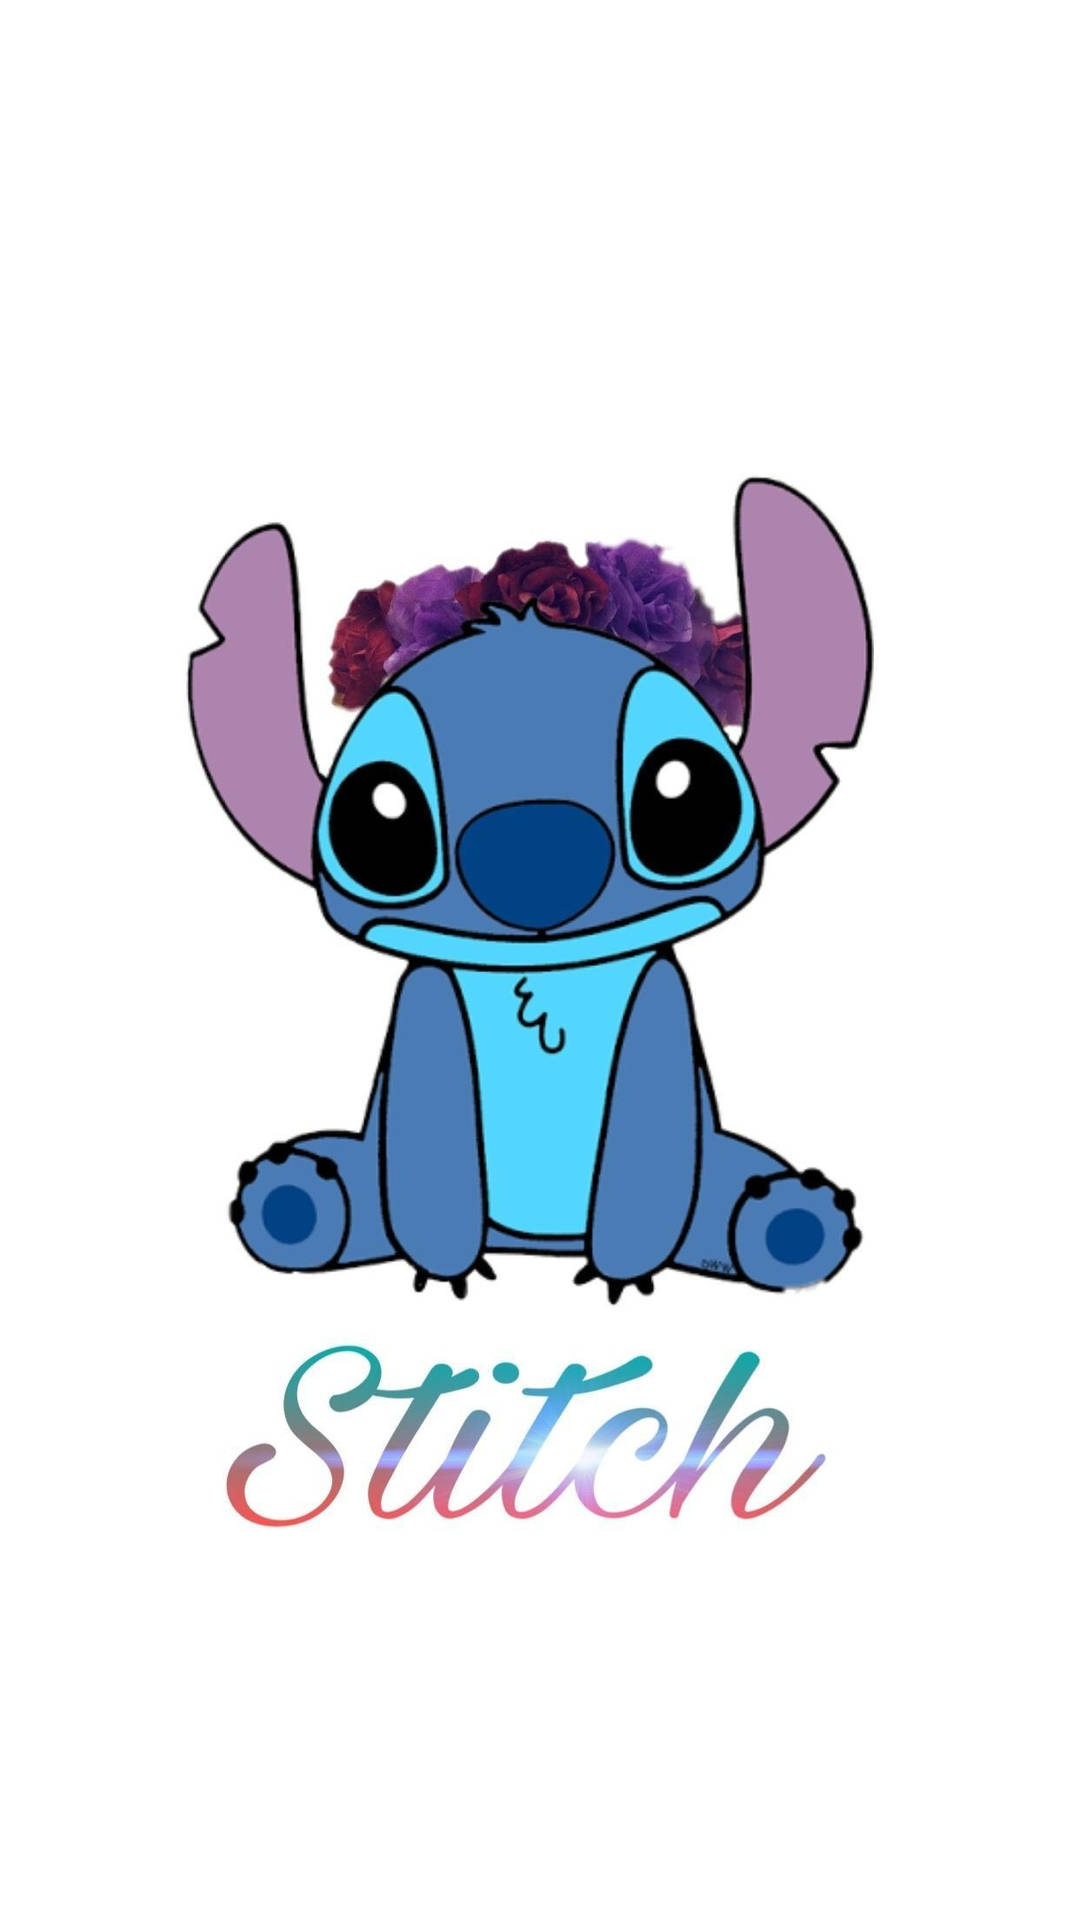 Cute Disney Stitch Flower Crown Wallpaper